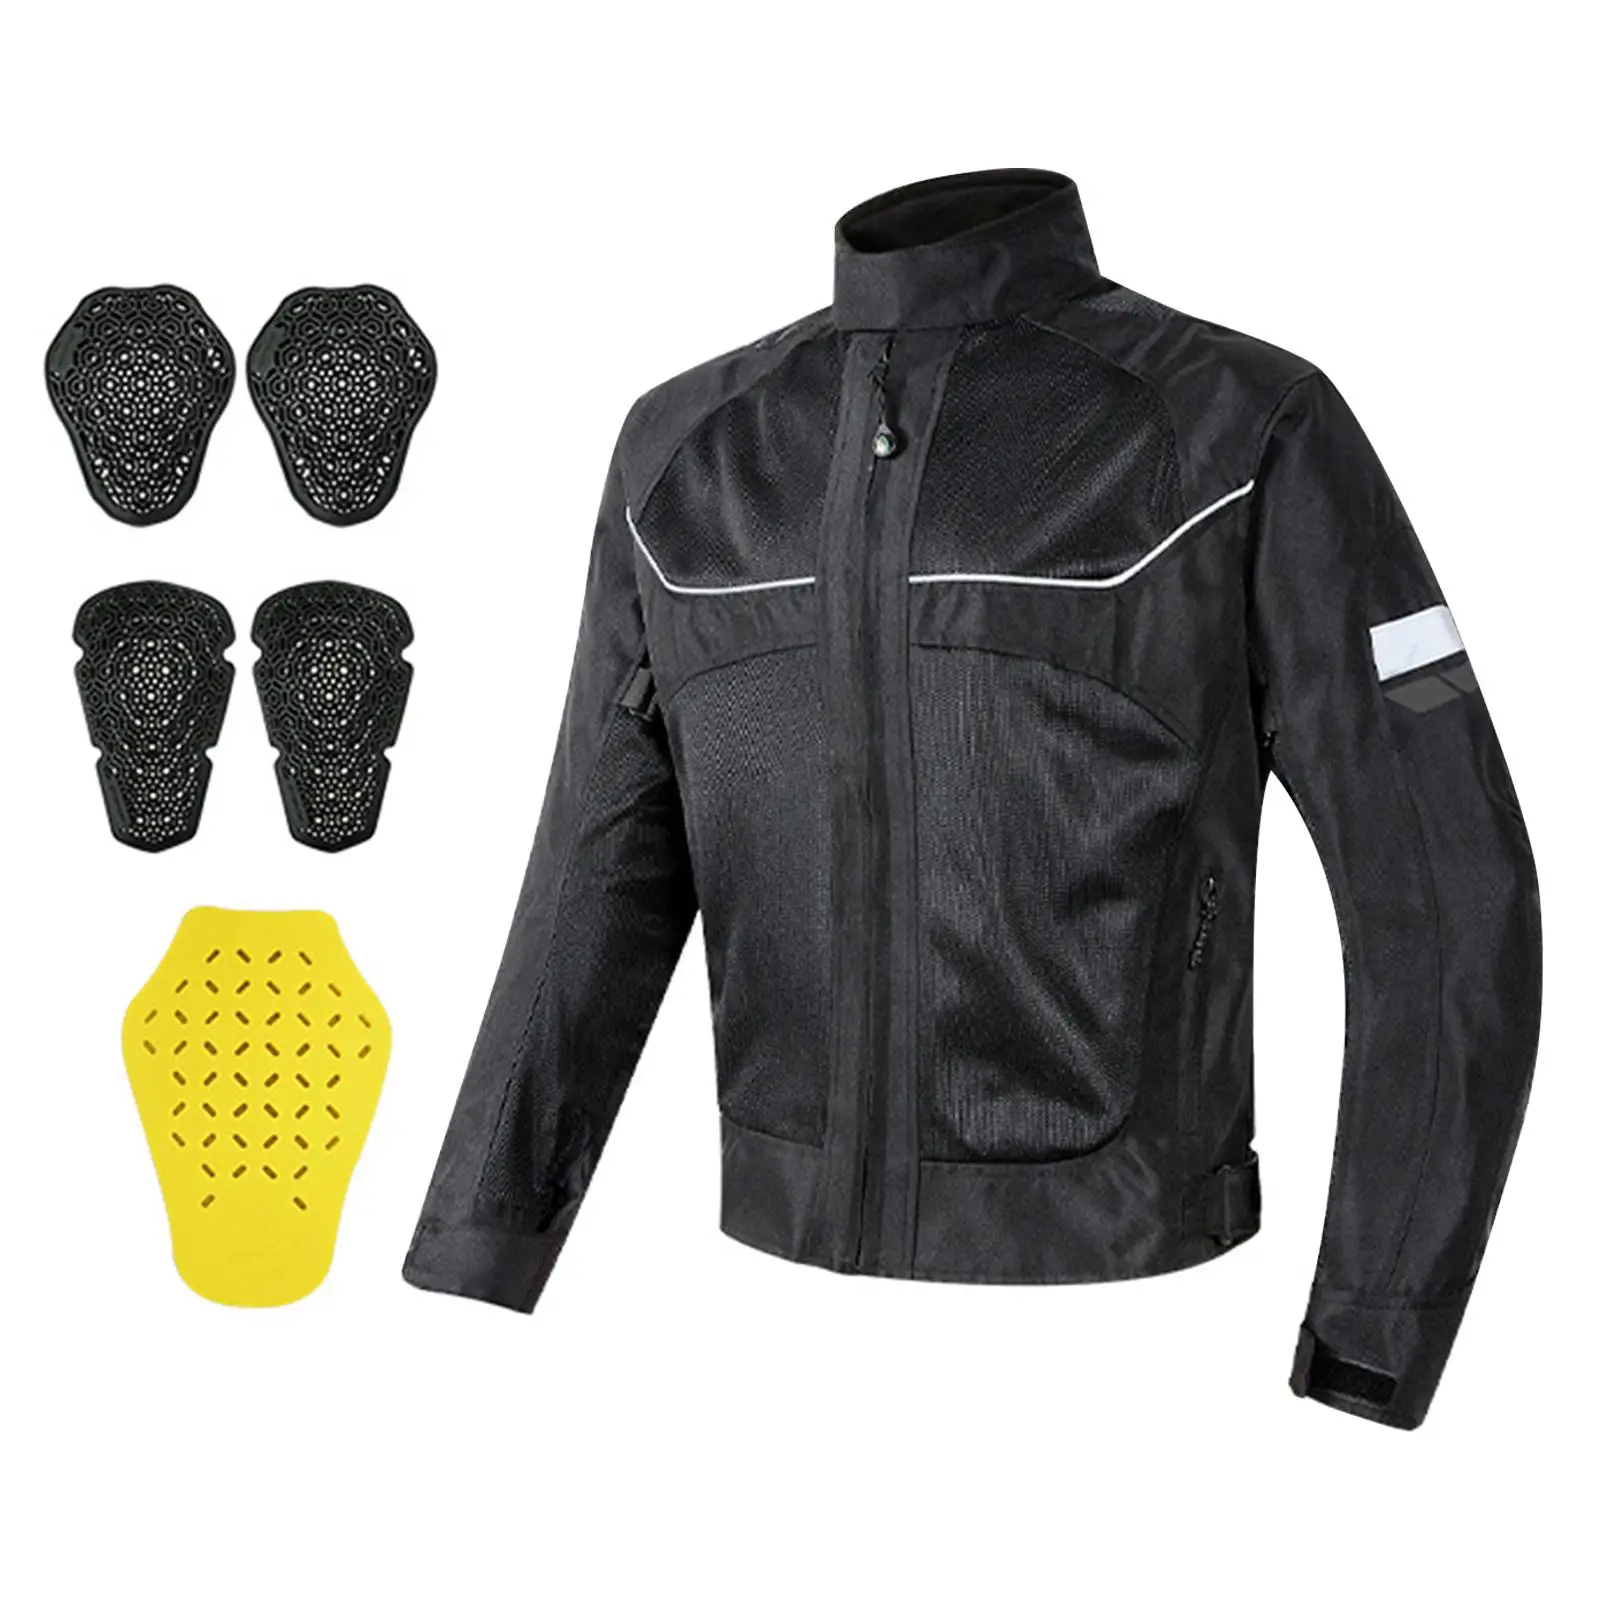 Motorcycle jacket for men Motorcycle jacket for summer motorcycle